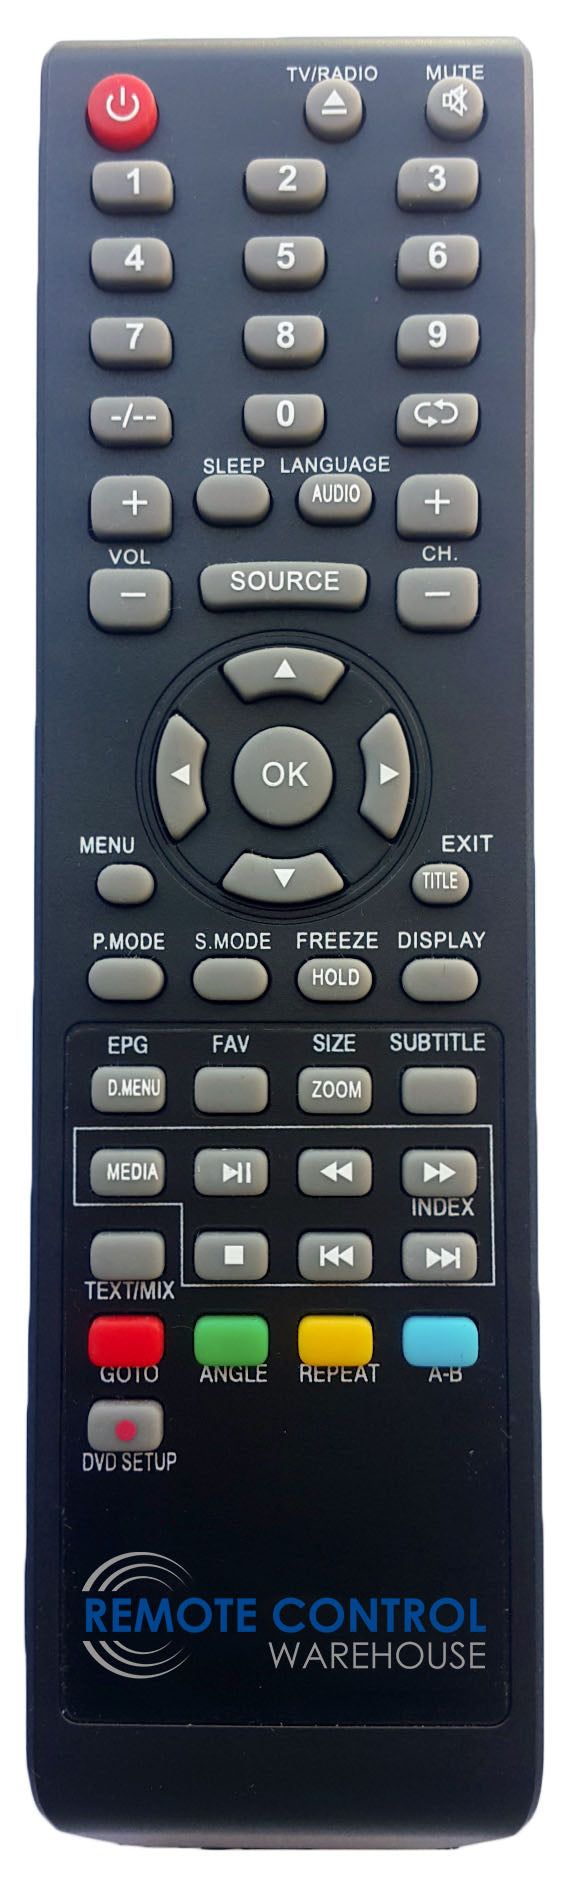 REPLACEMENT GVA REMOTE CONTROL - GVAPLED22C  LCD TV - Remote Control Warehouse